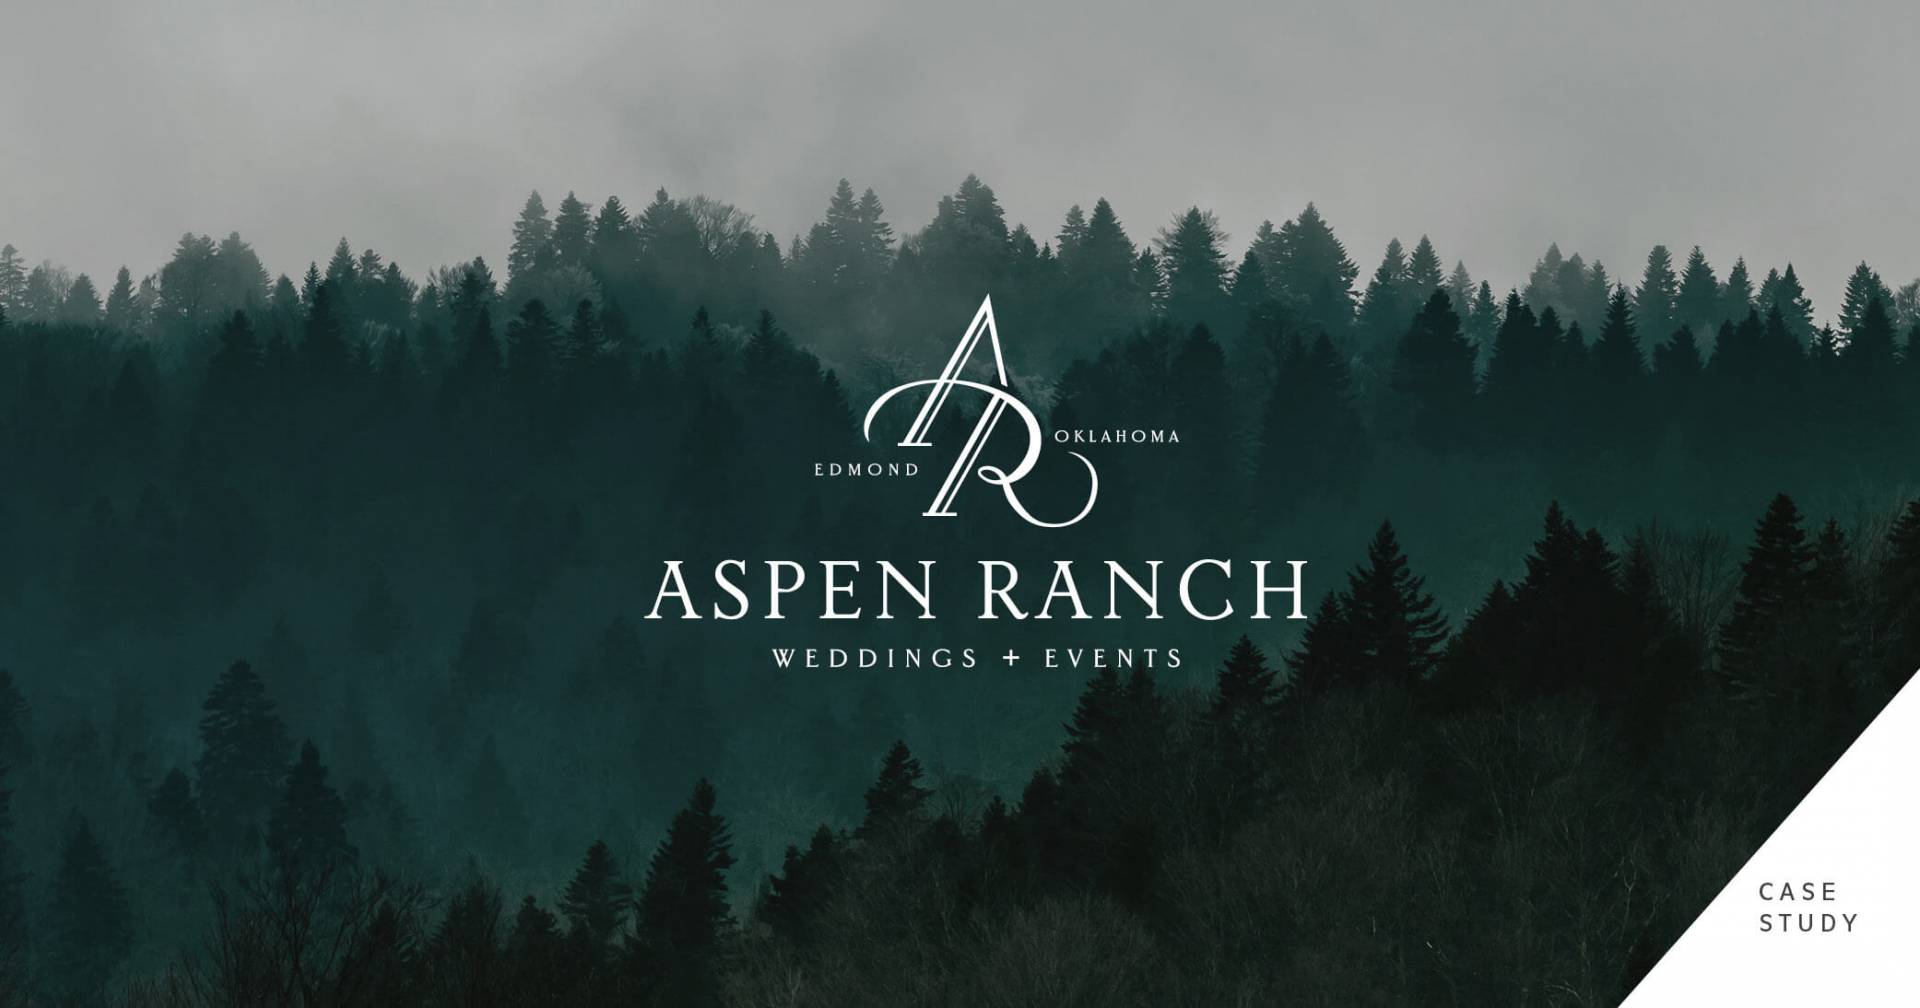 Aspen Ranch Weddings + Events